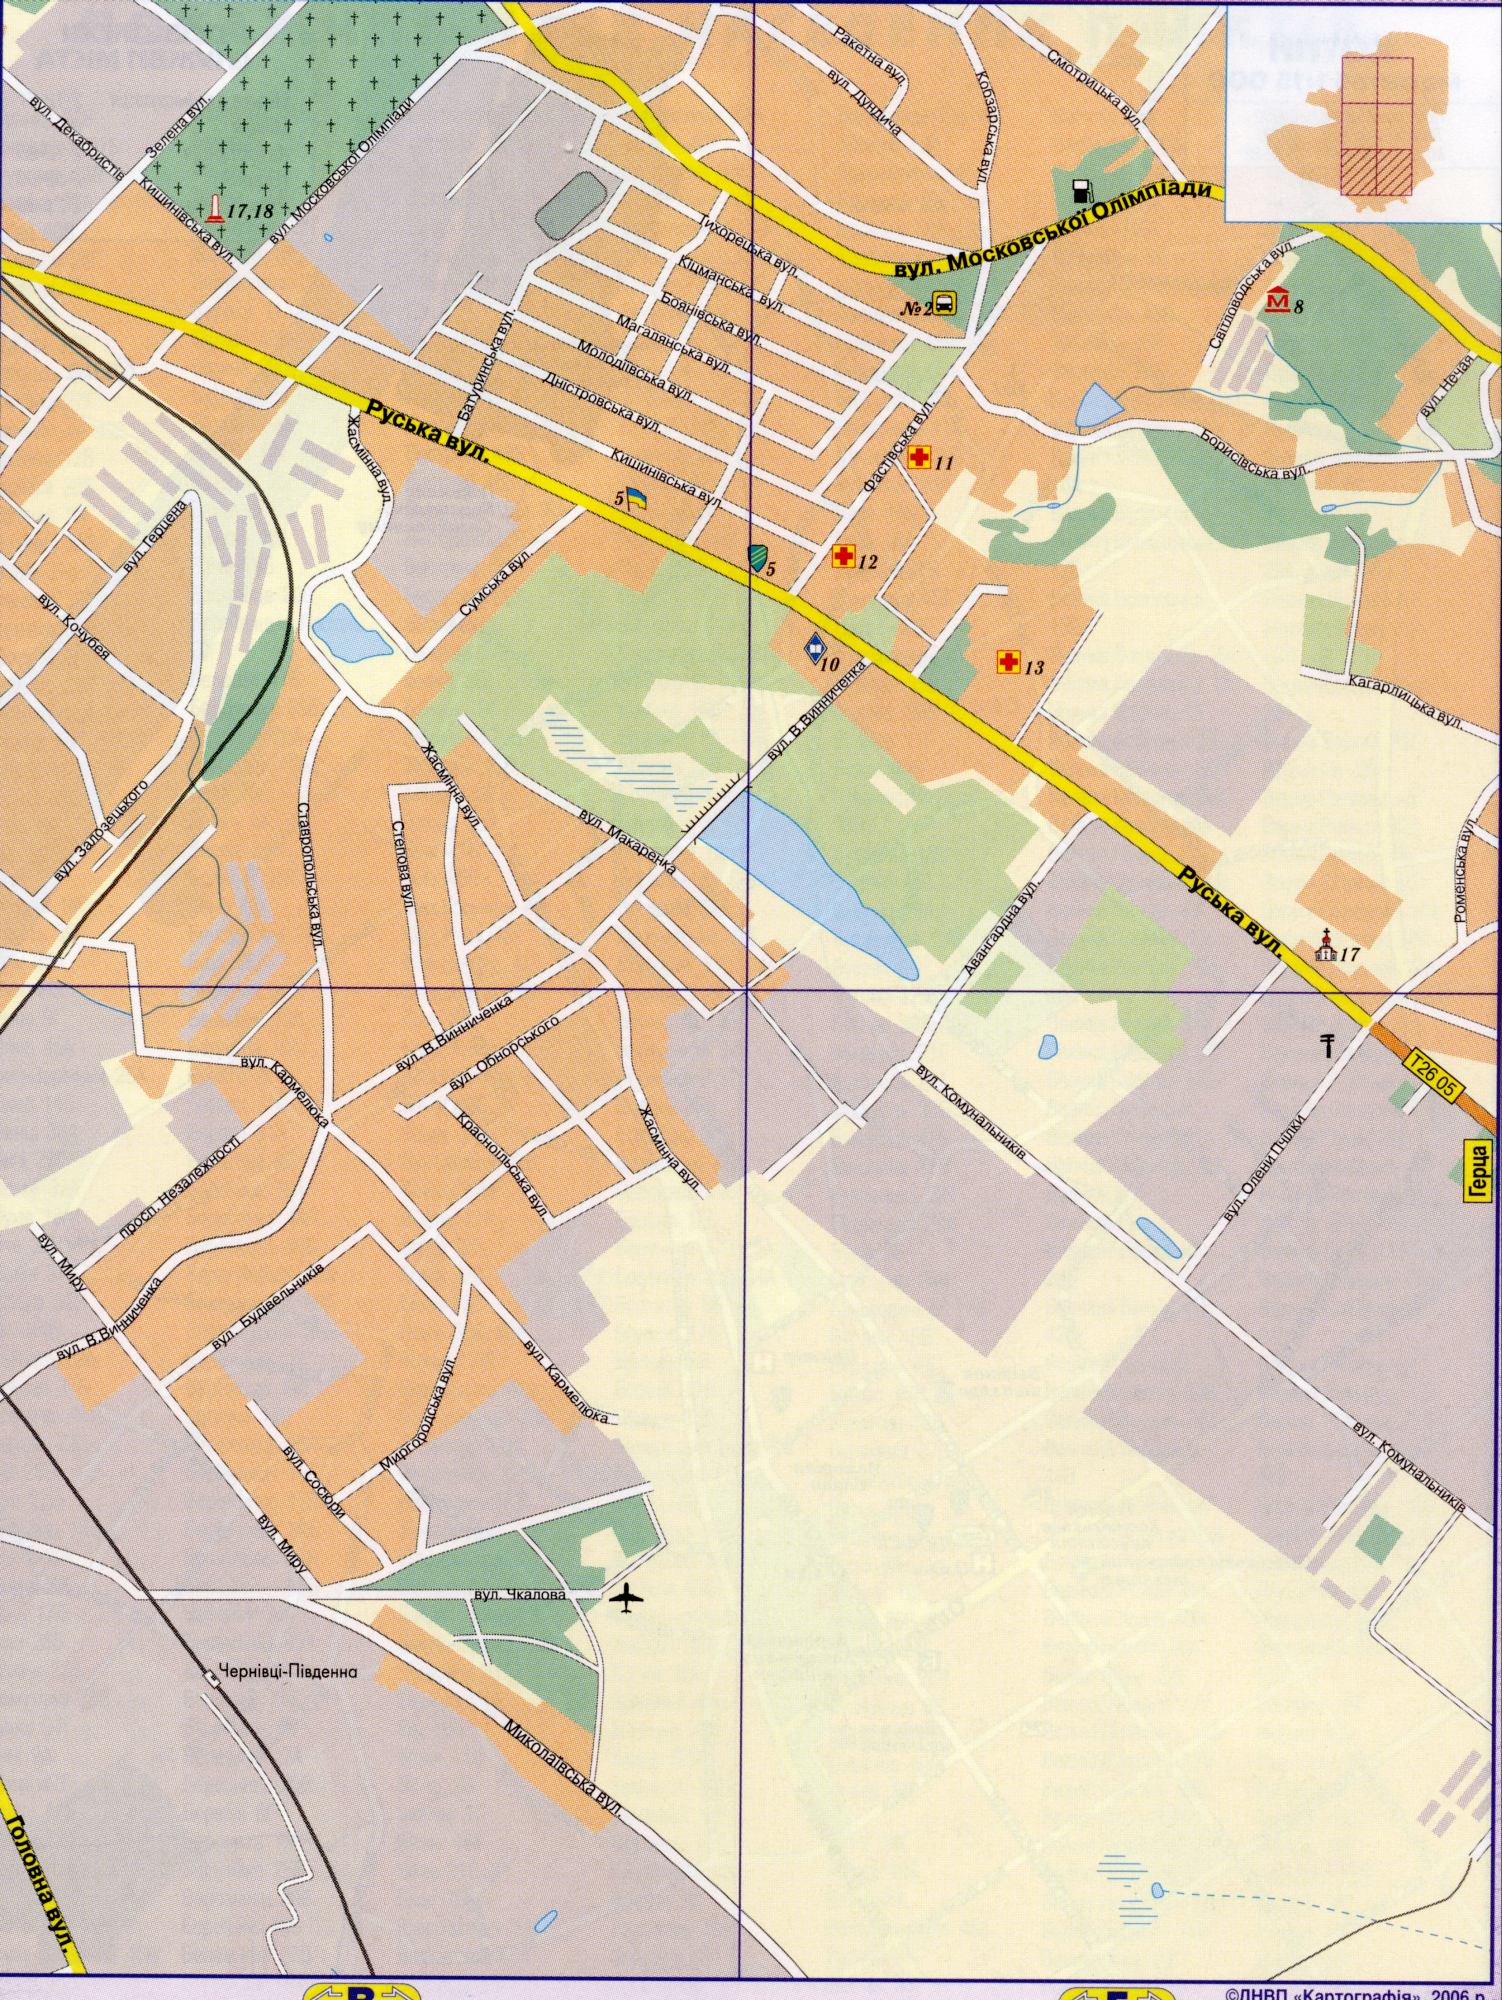 Map of Chernivtsi detailed (Ukraine city of Chernivtsi) in 1 cm 200 meters. Download a detailed map of highways, B0 - Moscow Olympics street